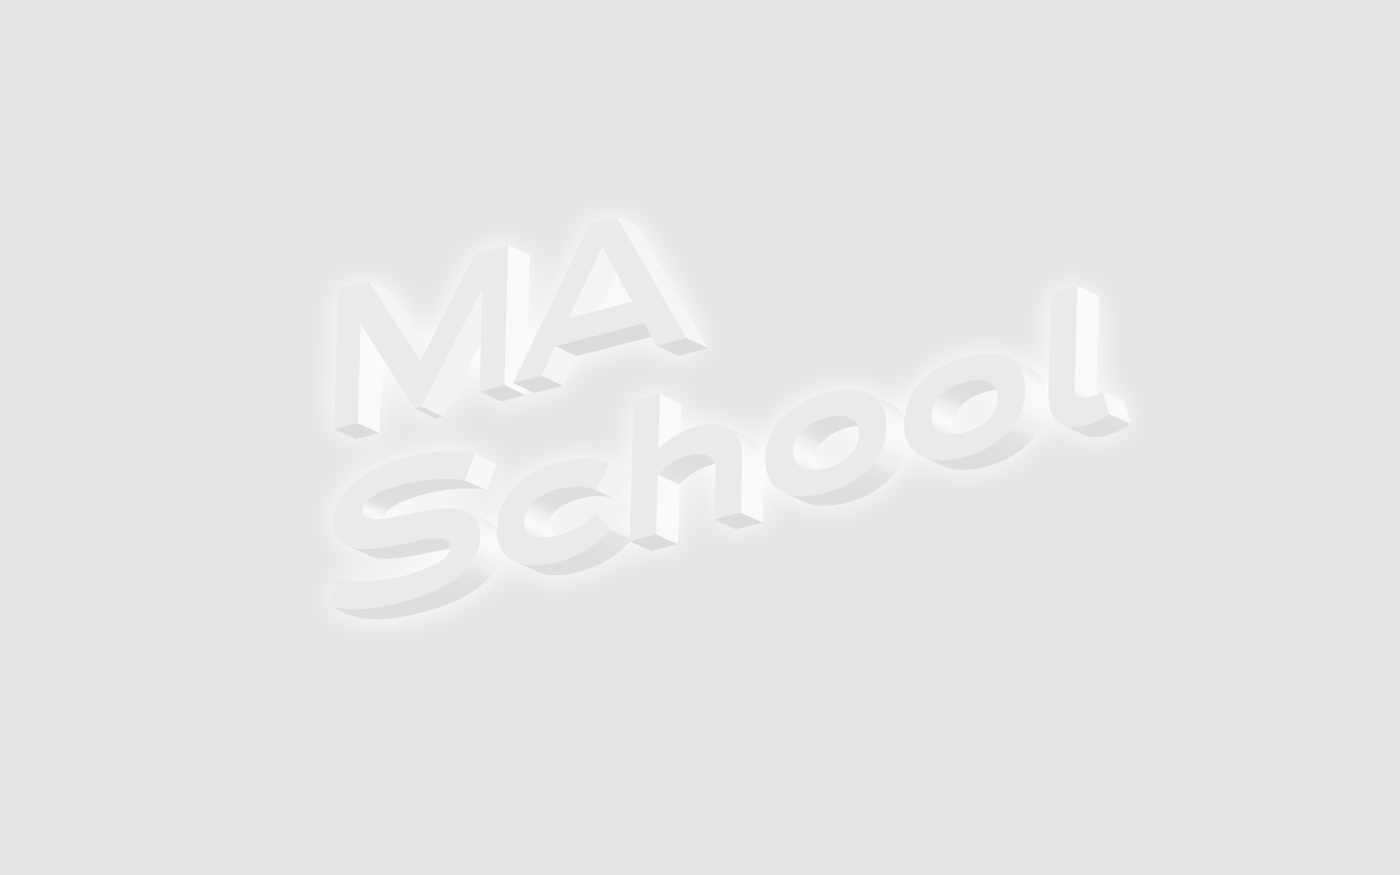 branding  concept graphic design  moholy-nagy mome University art university identity Layout Laslo